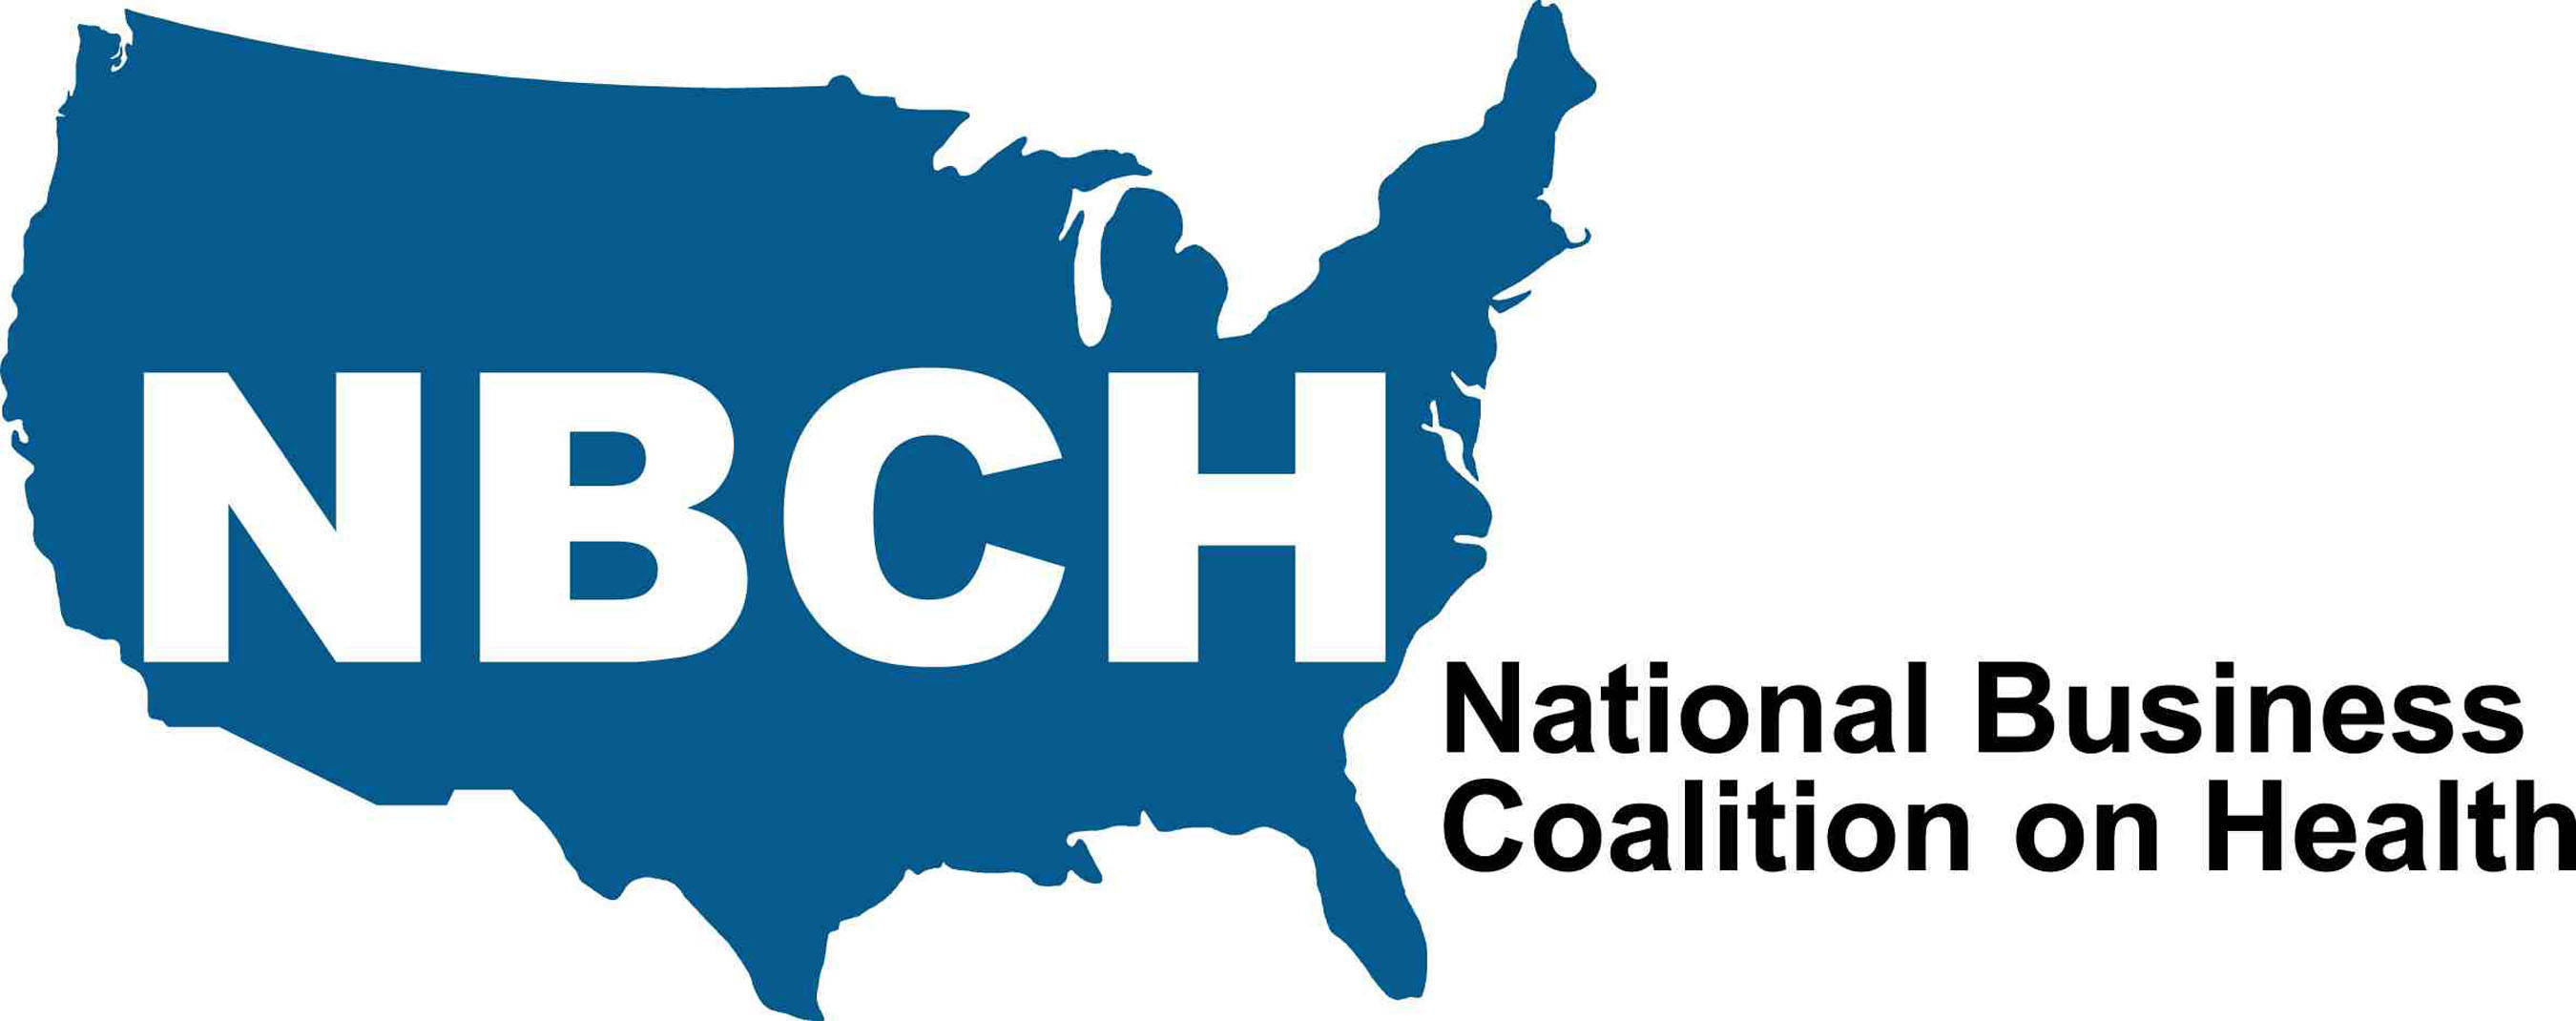 National Business Coalition on Health Logo. (PRNewsFoto/National Business Coalition on Health) (PRNewsFoto/)